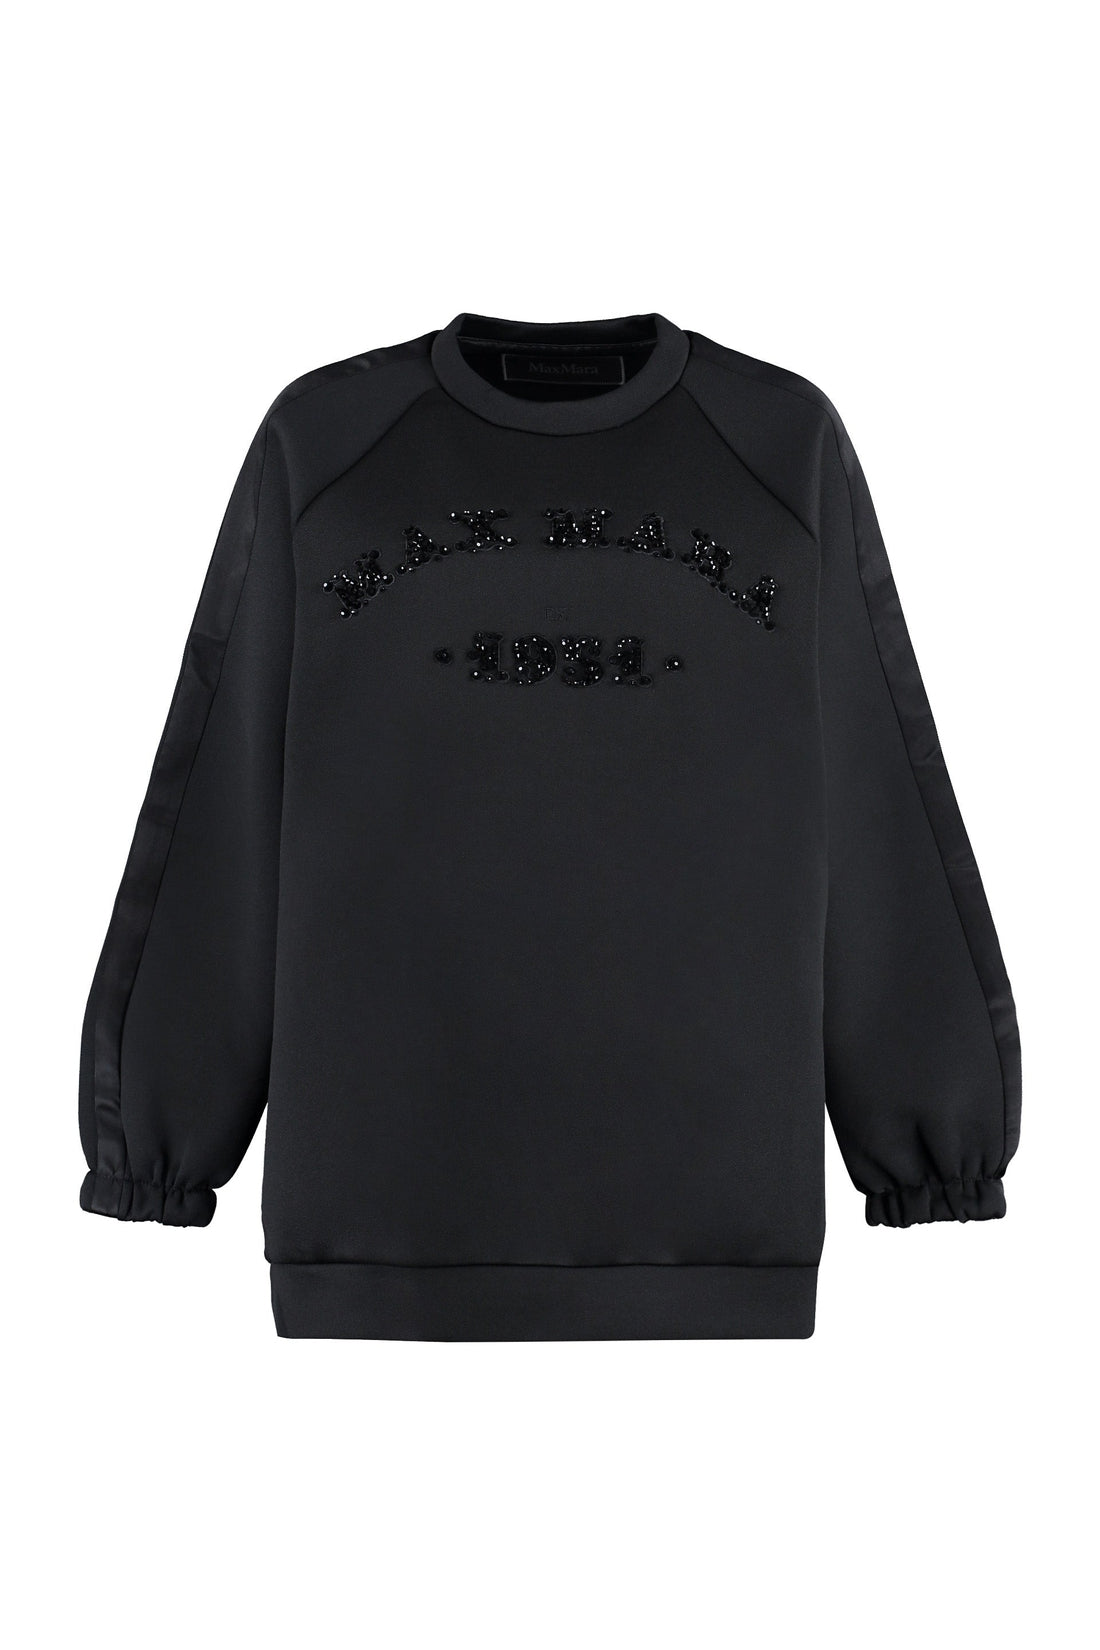 Max Mara-OUTLET-SALE-Bratto techno jersey sweatshirt-ARCHIVIST